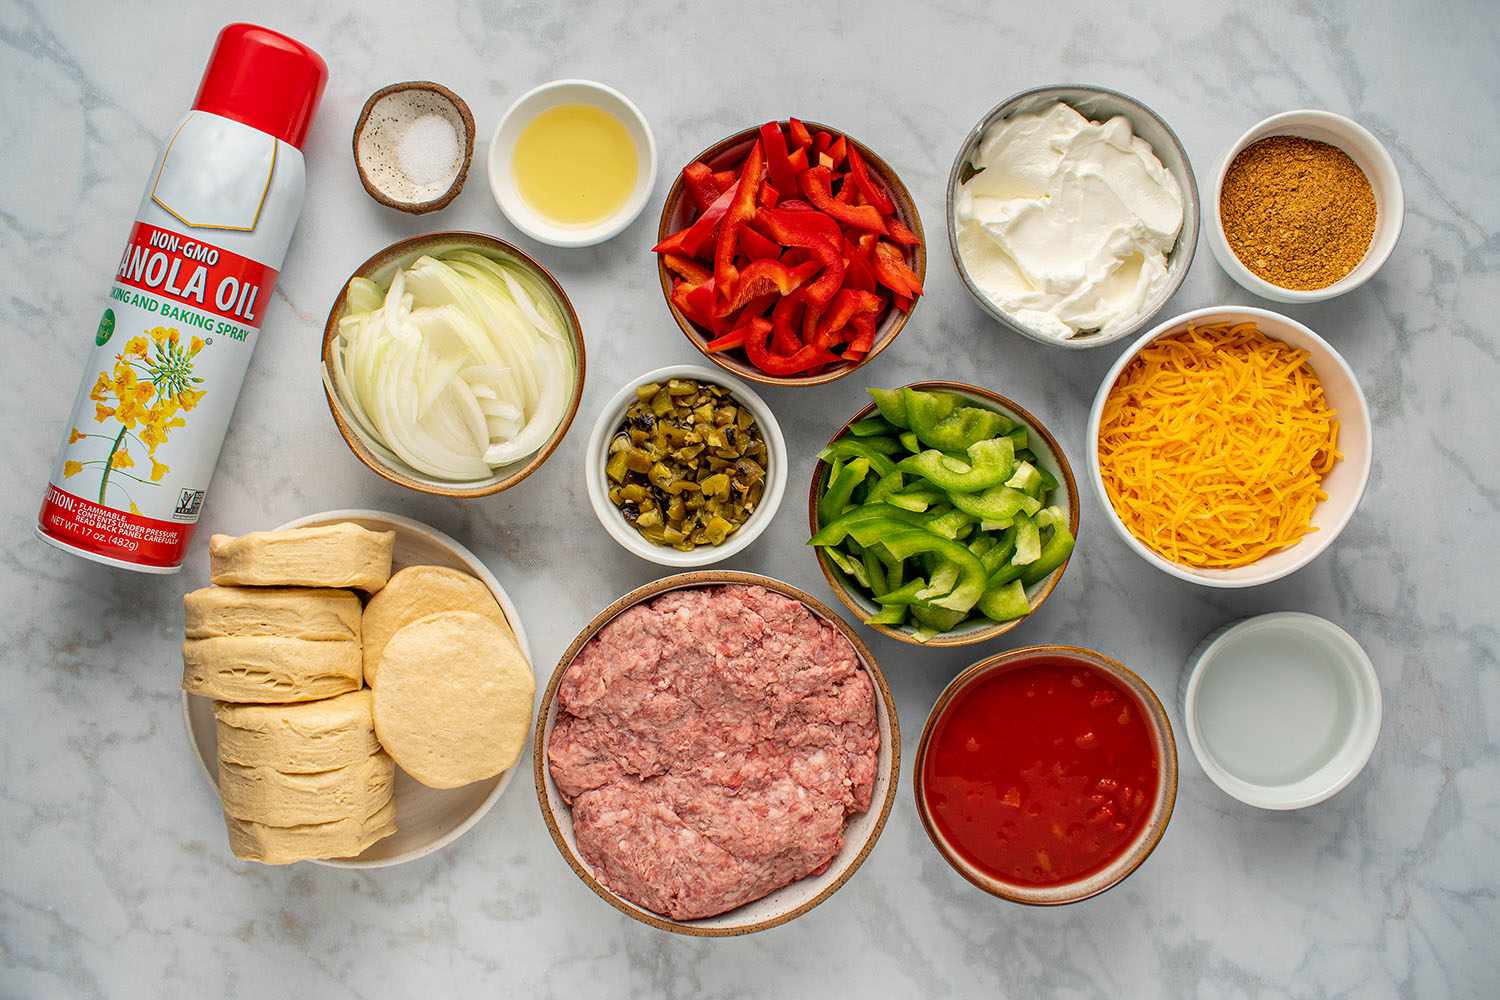 Ingredients for John Wayne casserole recipe gathered